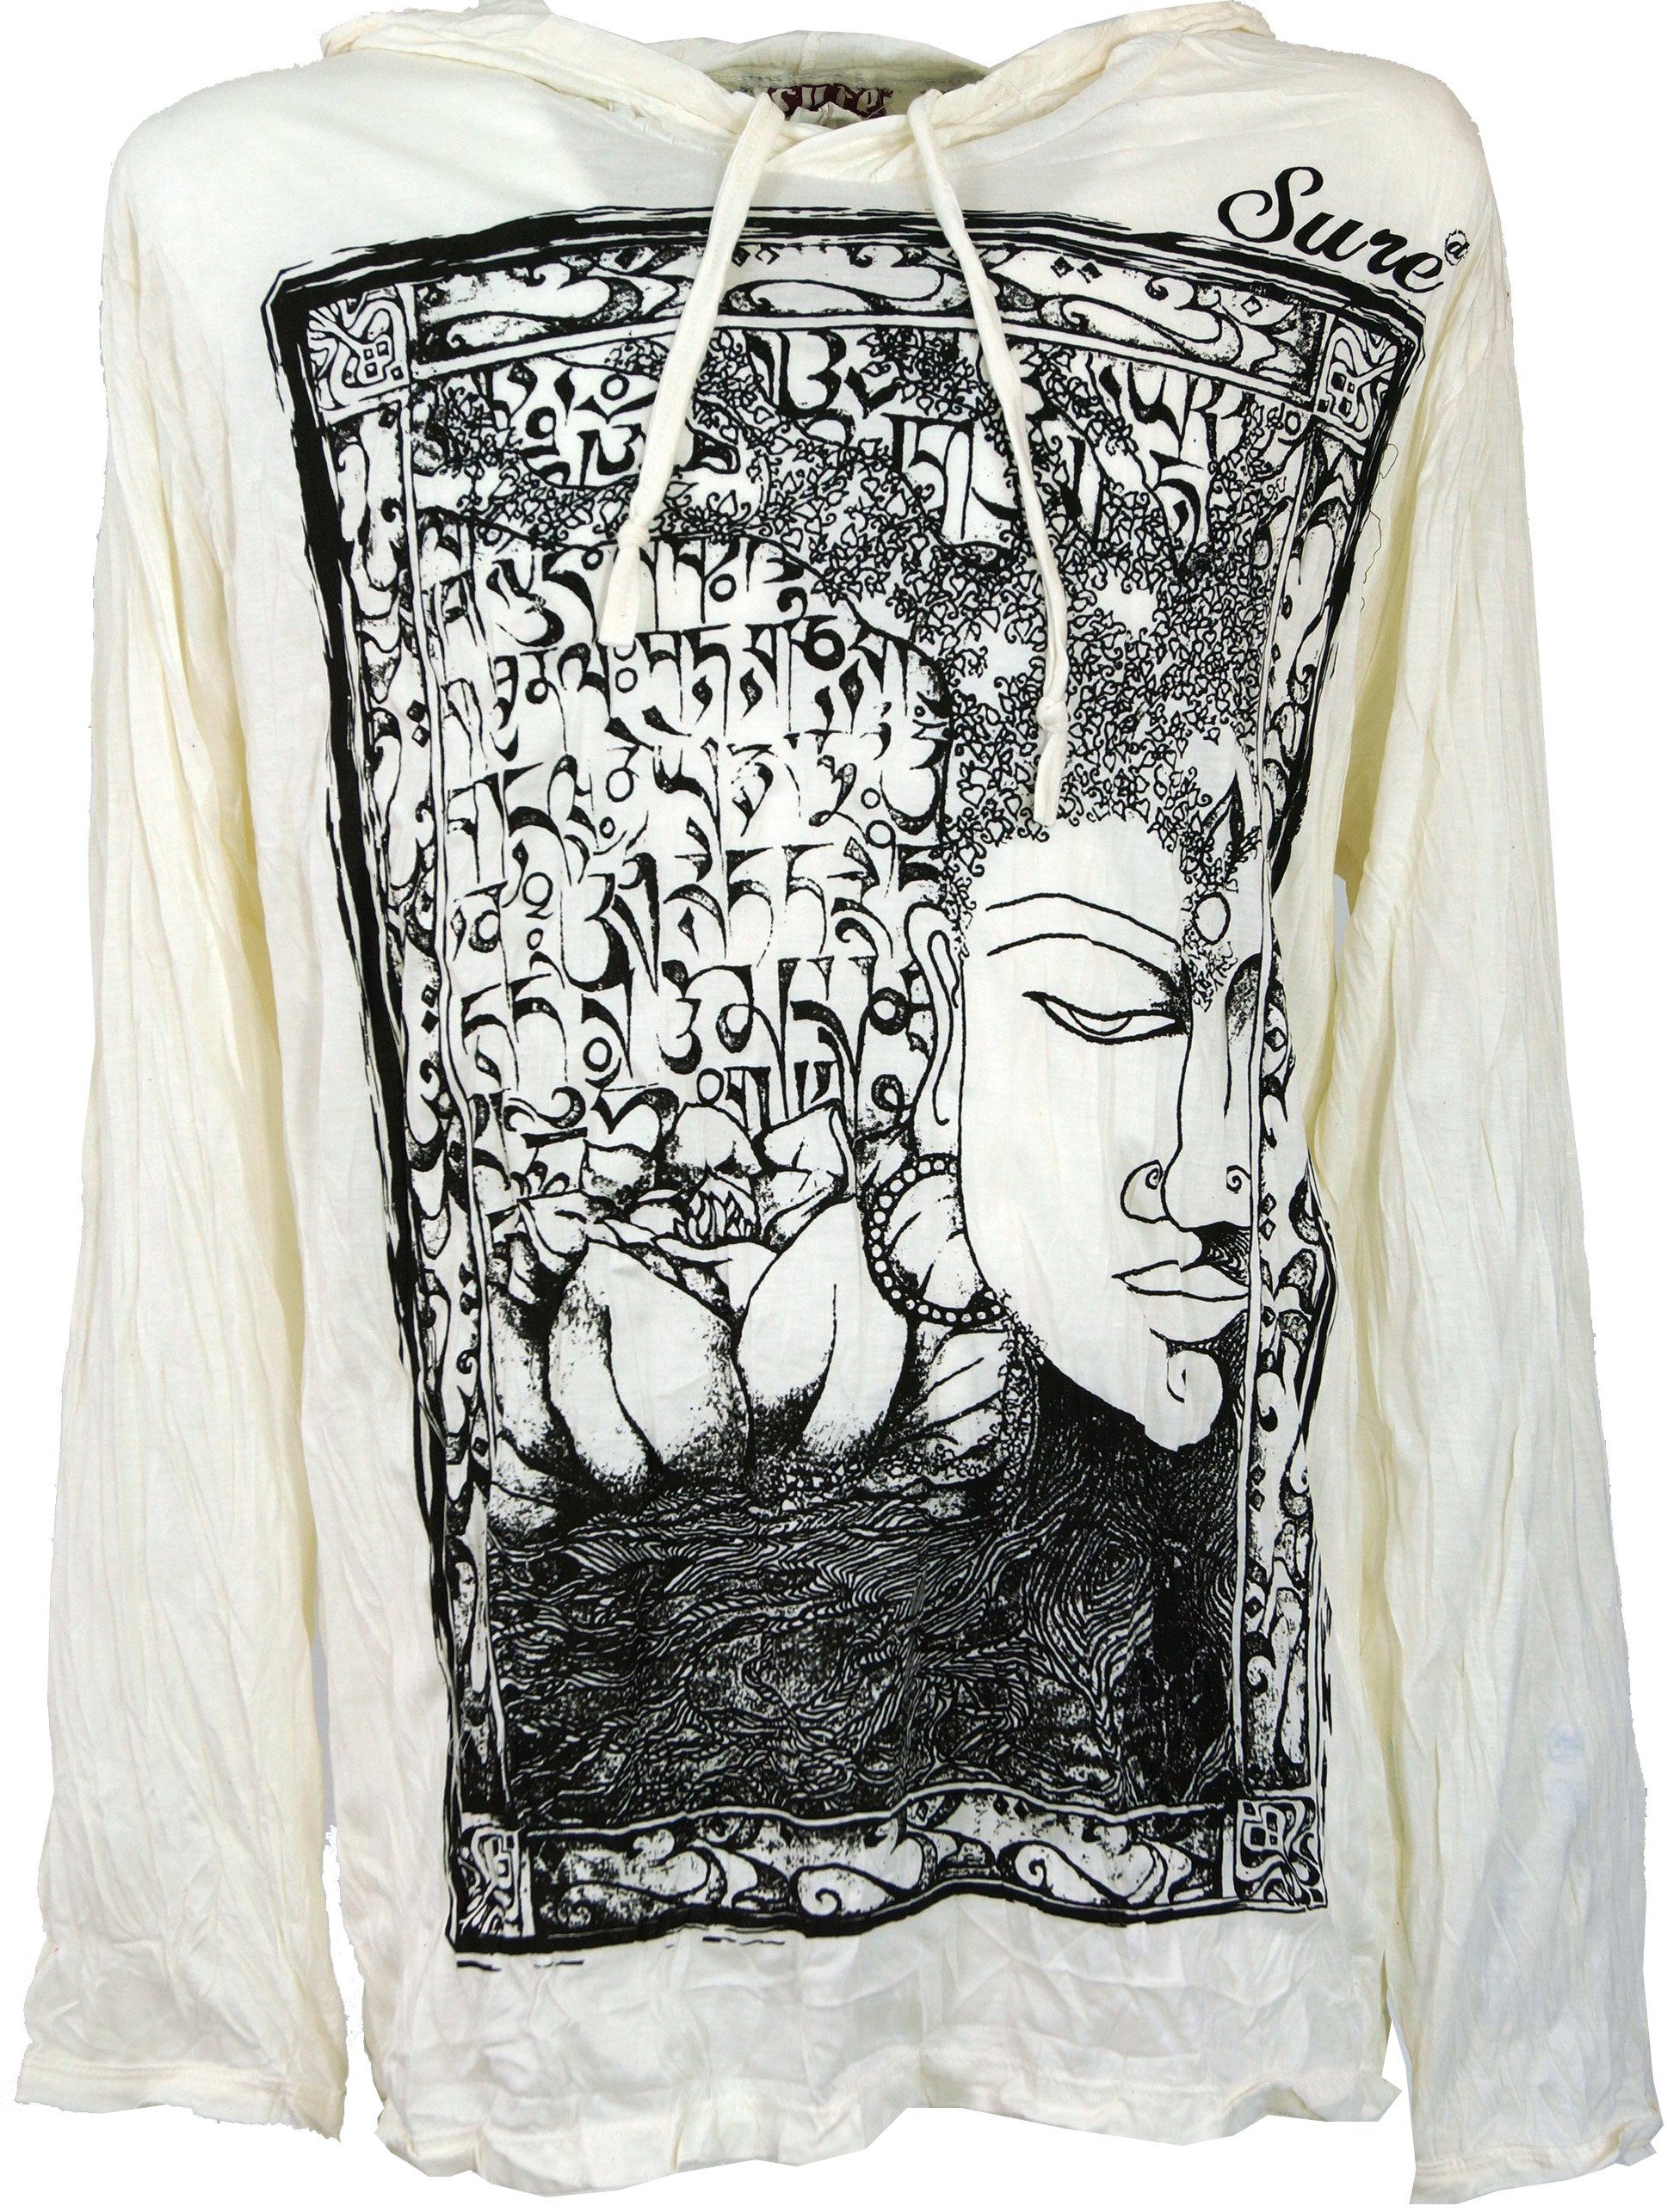 Goa alternative Guru-Shop T-Shirt Style, -.. weiß Kapuzenshirt Sure Festival, Langarmshirt, Bekleidung Mantra Buddha